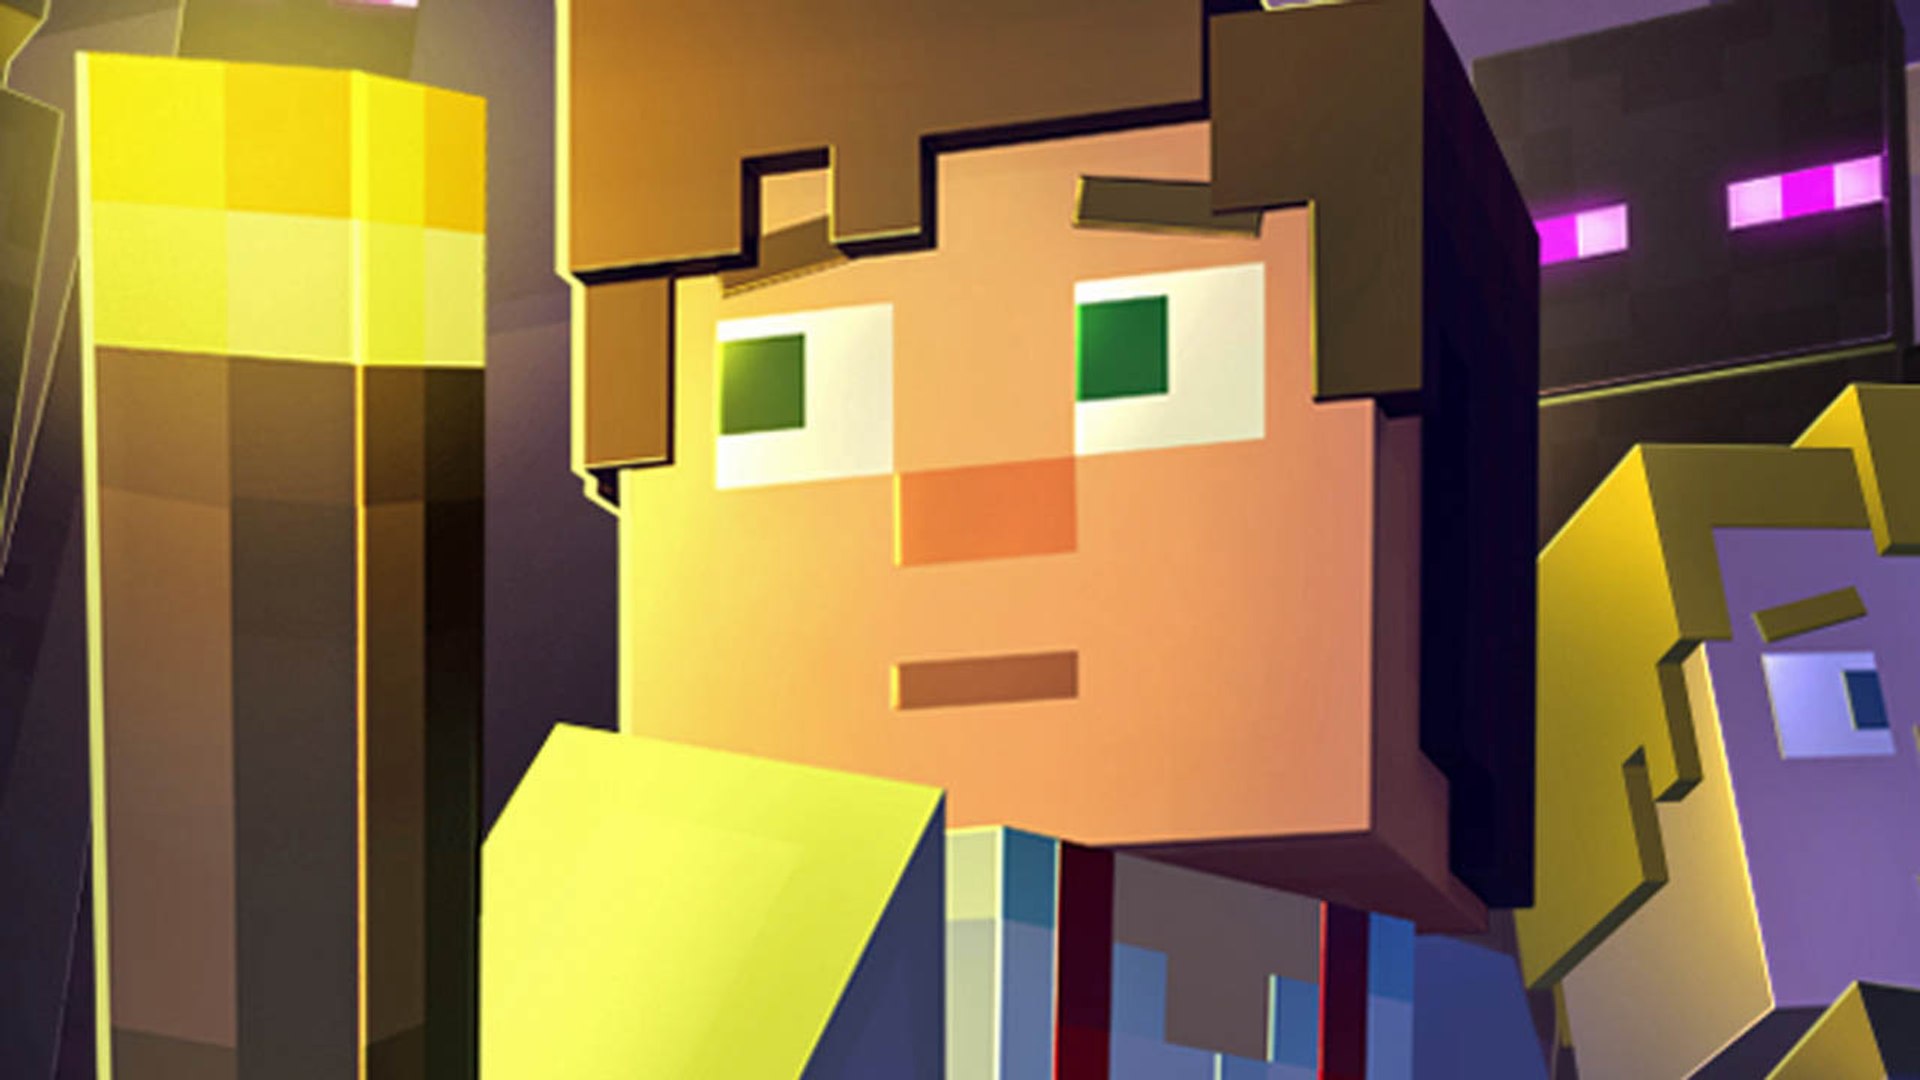 Minecraft: Story Mode Episode 3 trailer reveals November 24 release date